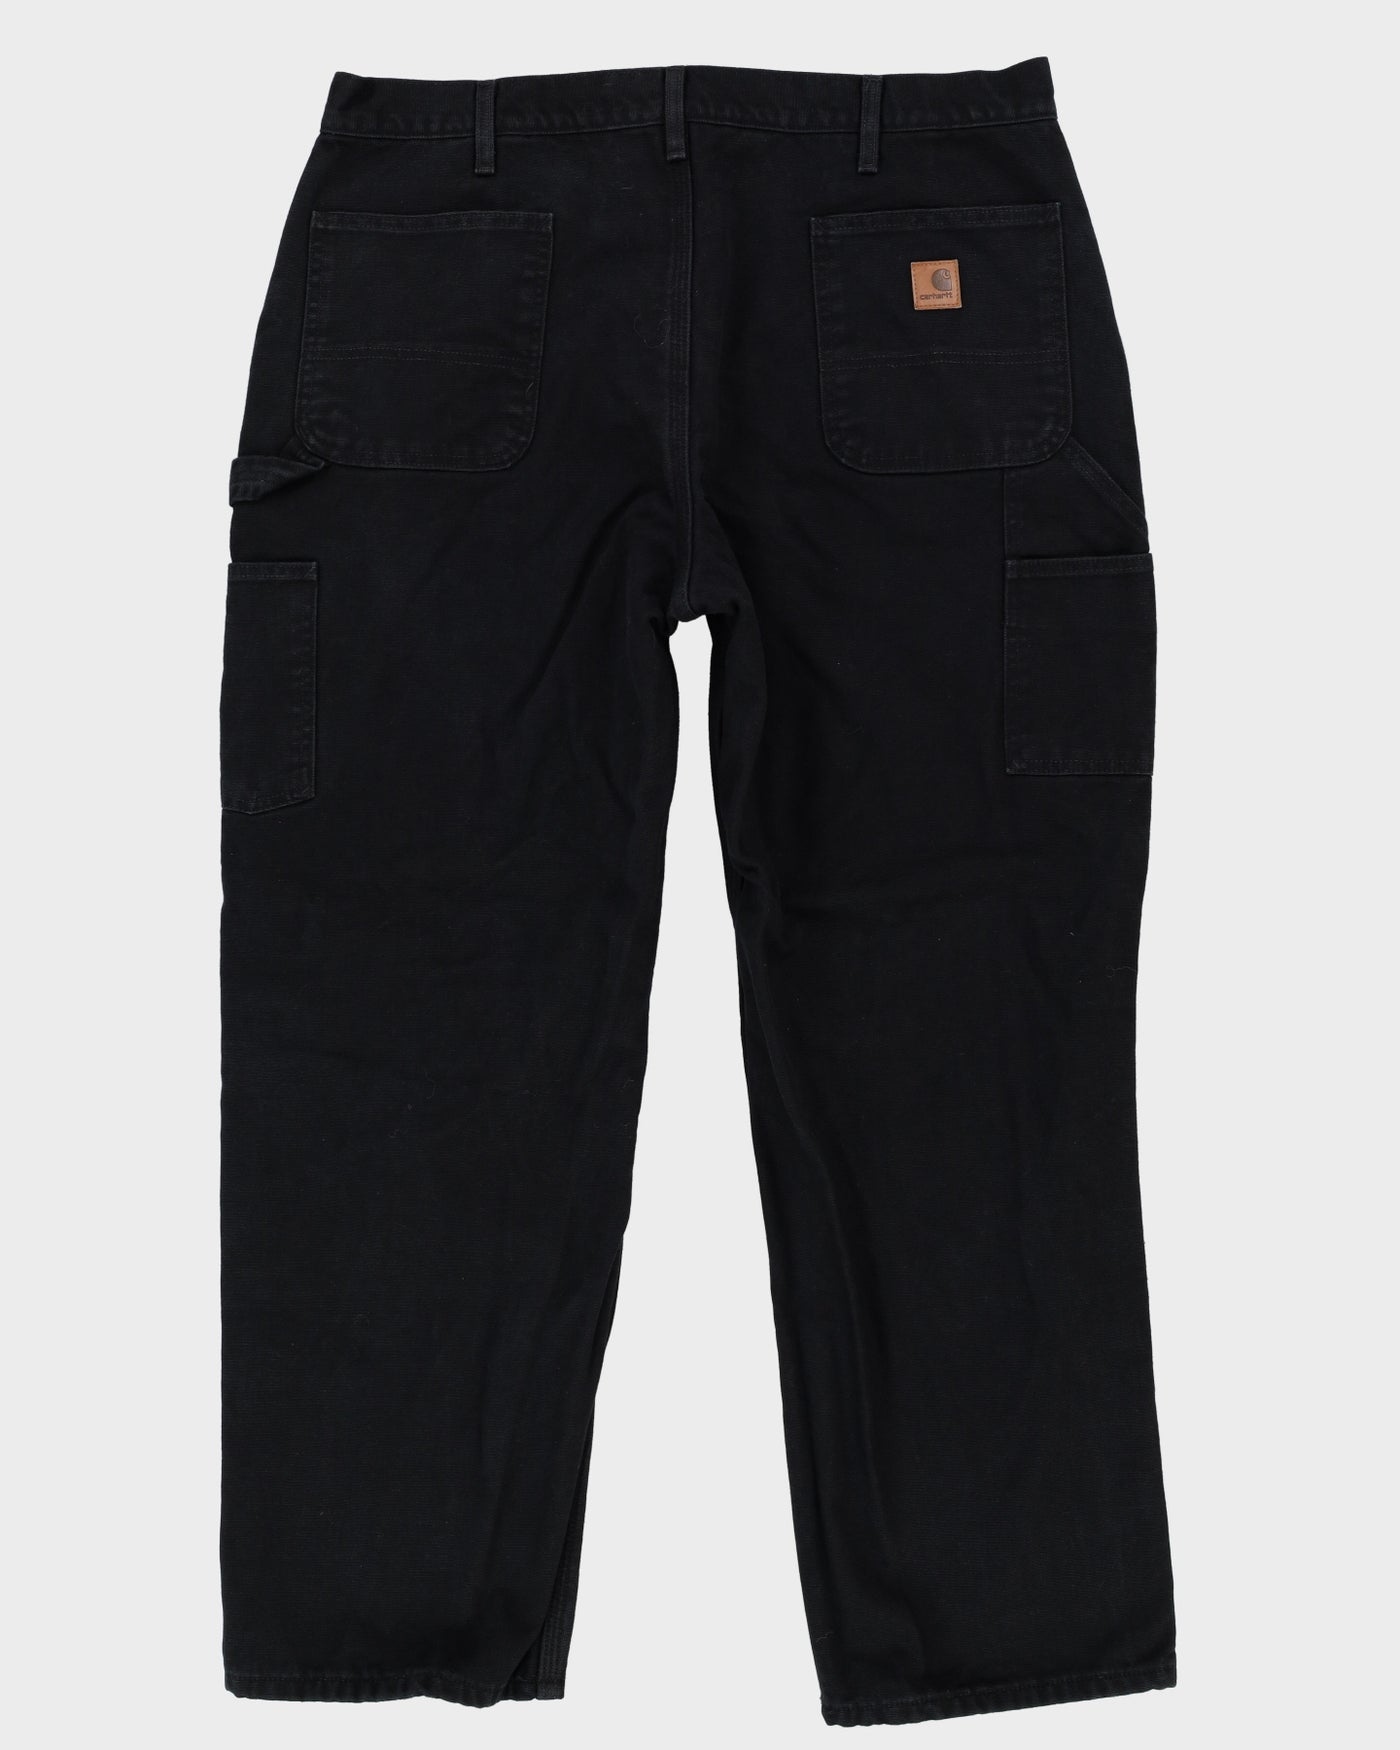 Carhartt Black Lined Workwear Jeans - W40 L31